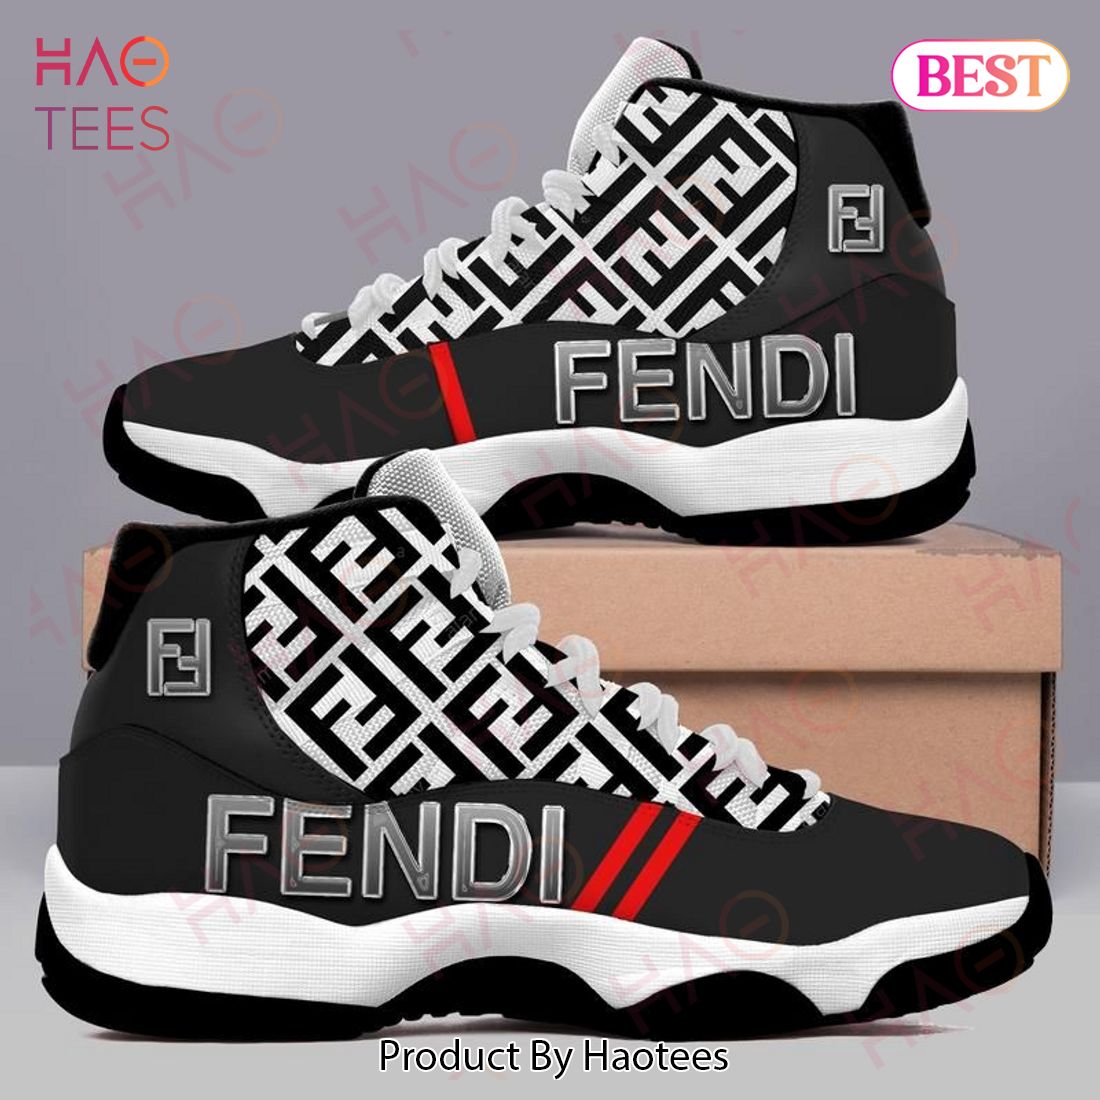 Fendi Red Line Air Jordan 11 Sneakers Shoes Hot 2022 Gifts For Men Women